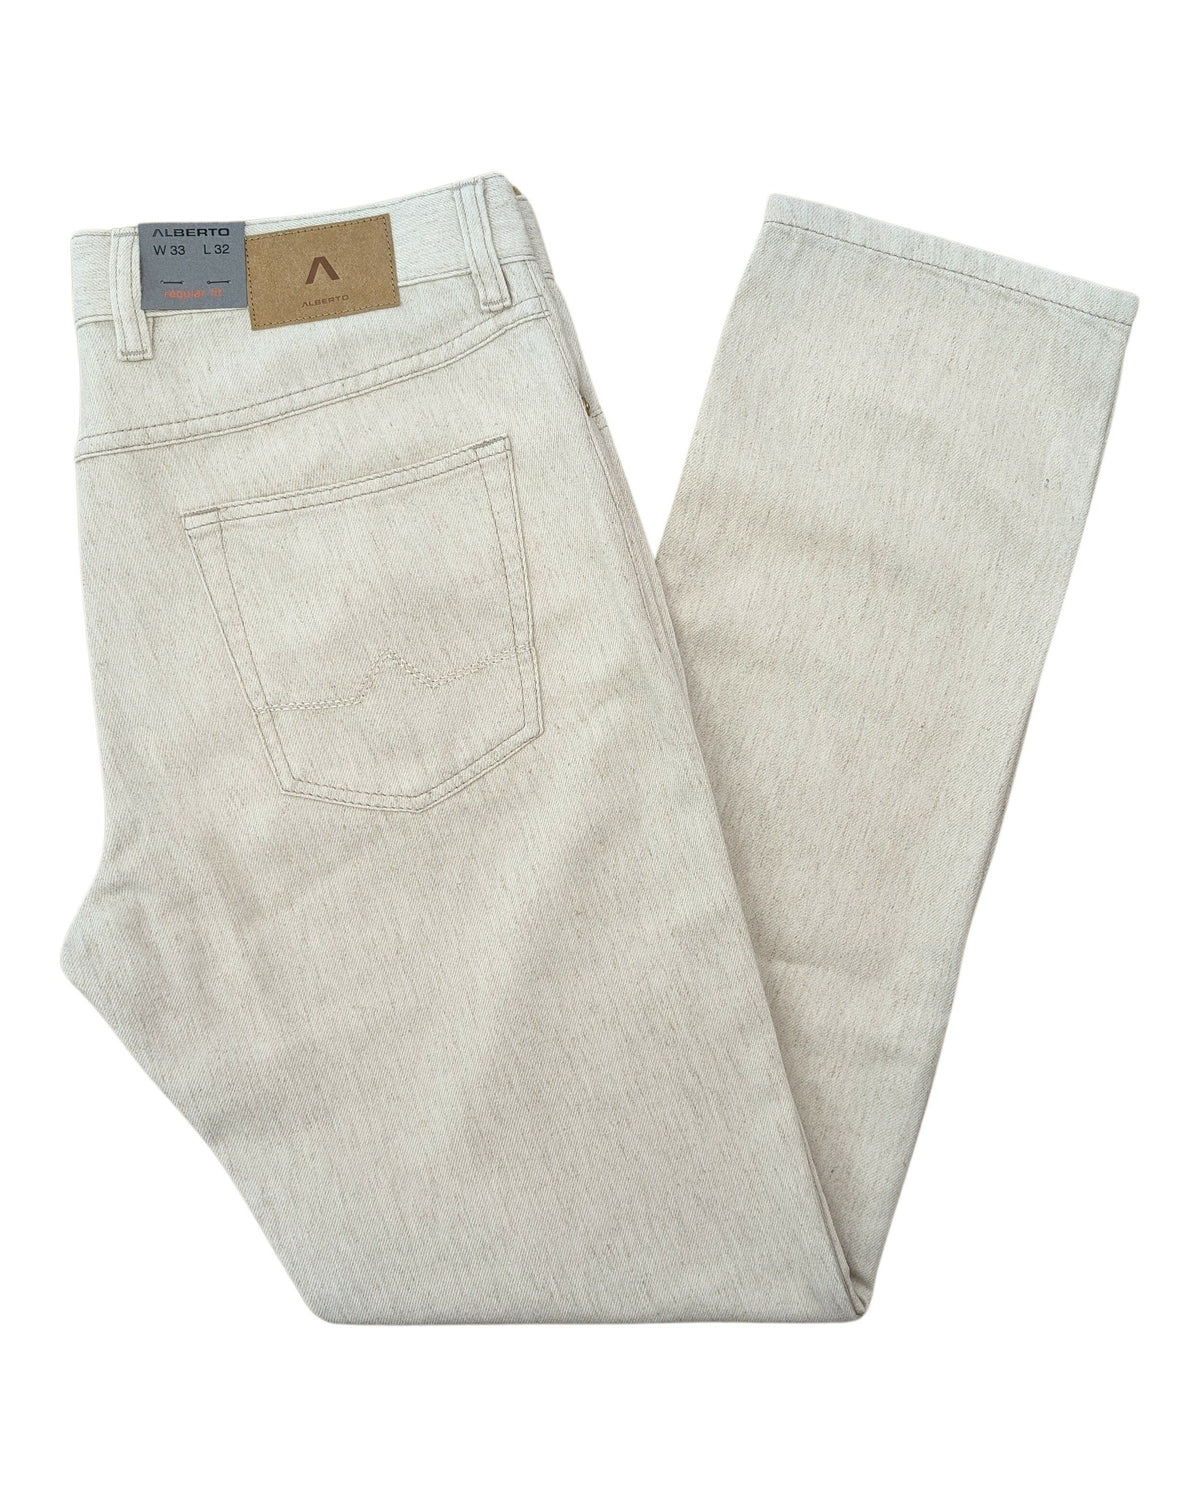 Alberto Alberto Pipe 1955 Regular Fit Cotton Linen Blend Pants